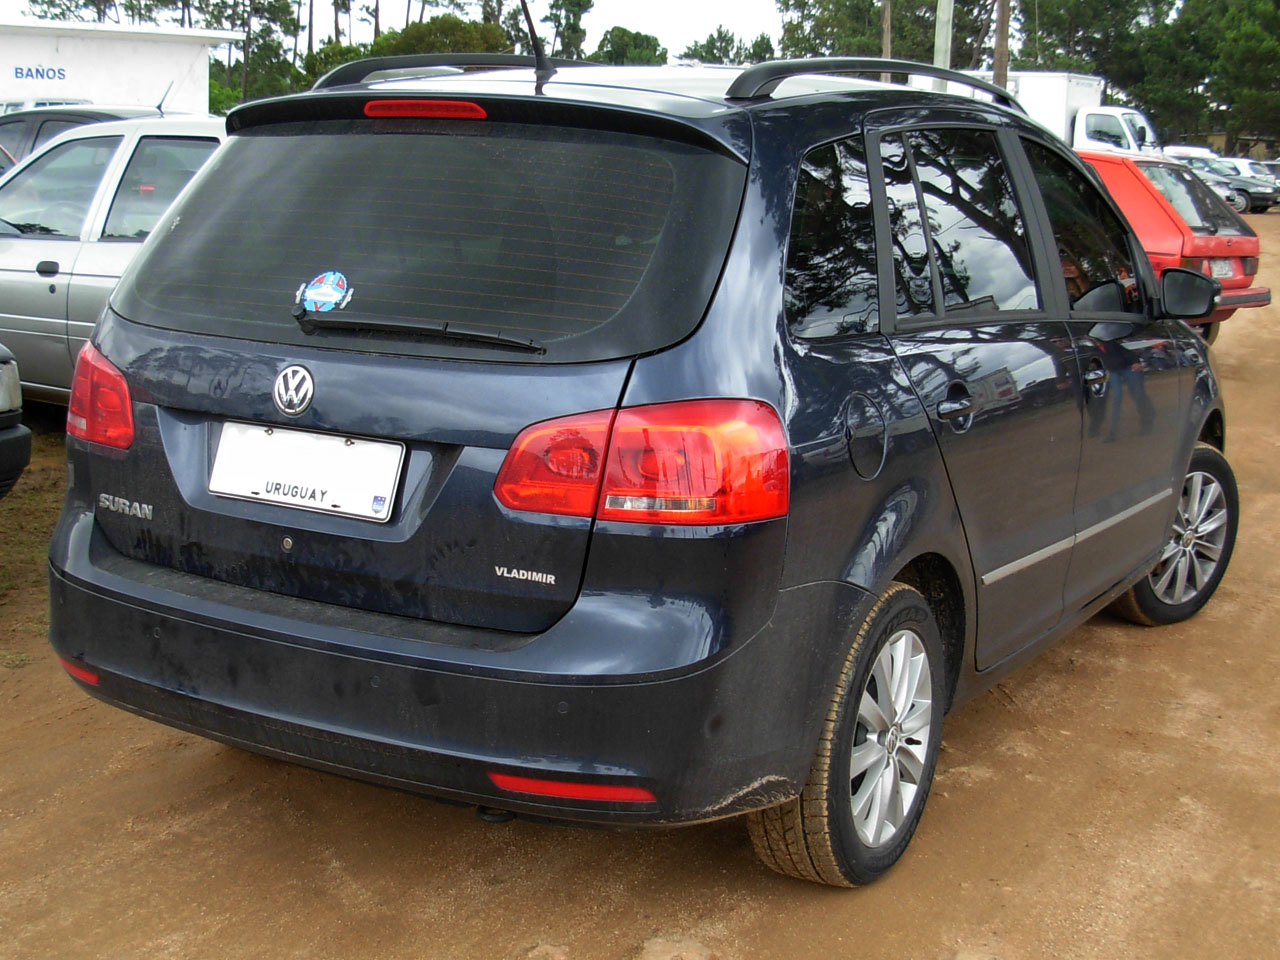 File:Volkswagen Suran 2010 - blue rear.jpg